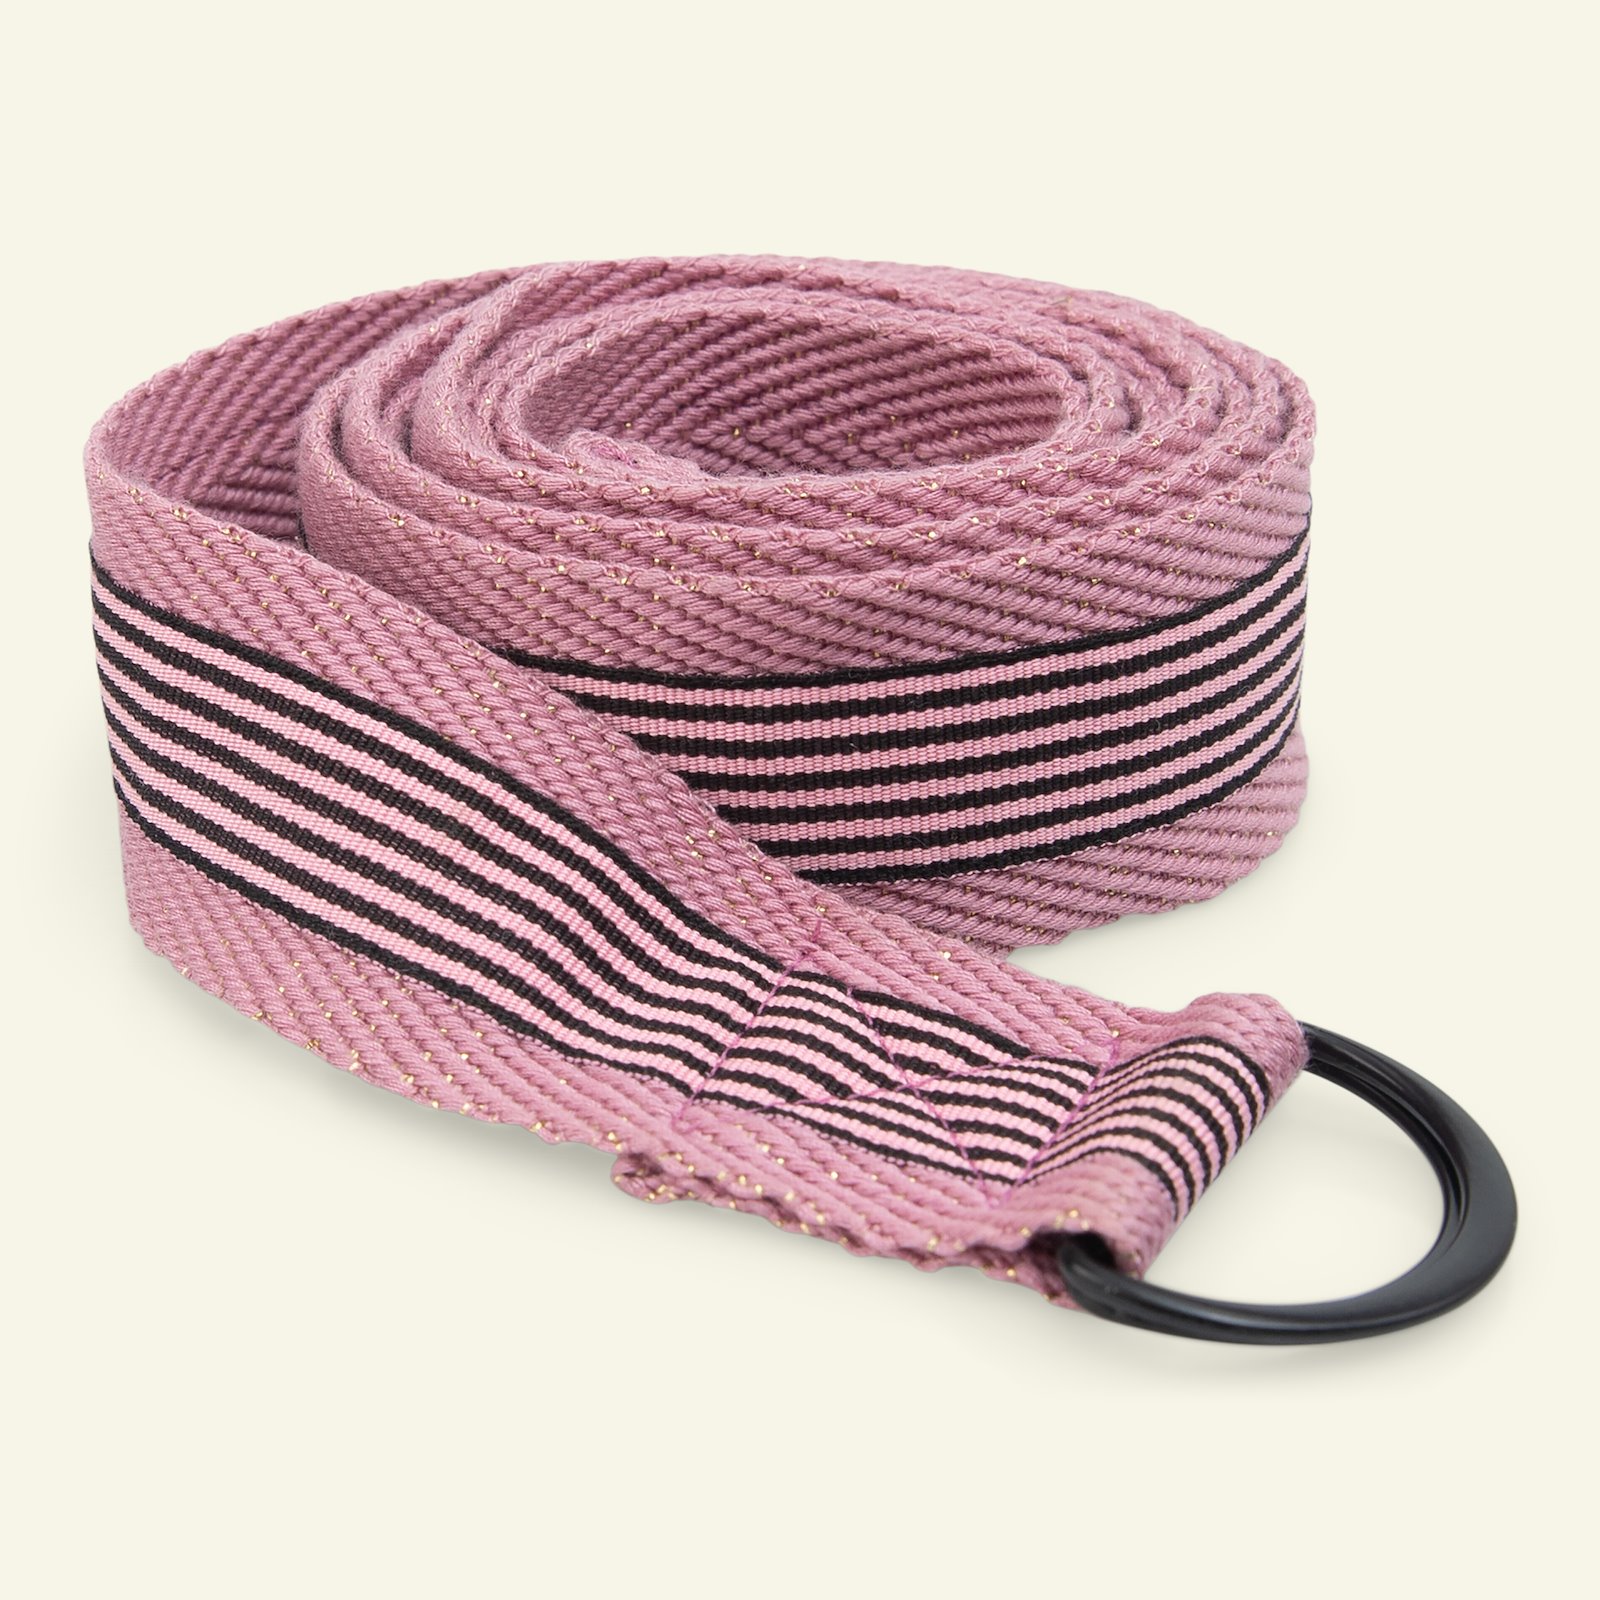 Ribbon woven stripe 20mm pink/black 3m p1000000547_21466_21470_43137_sskit